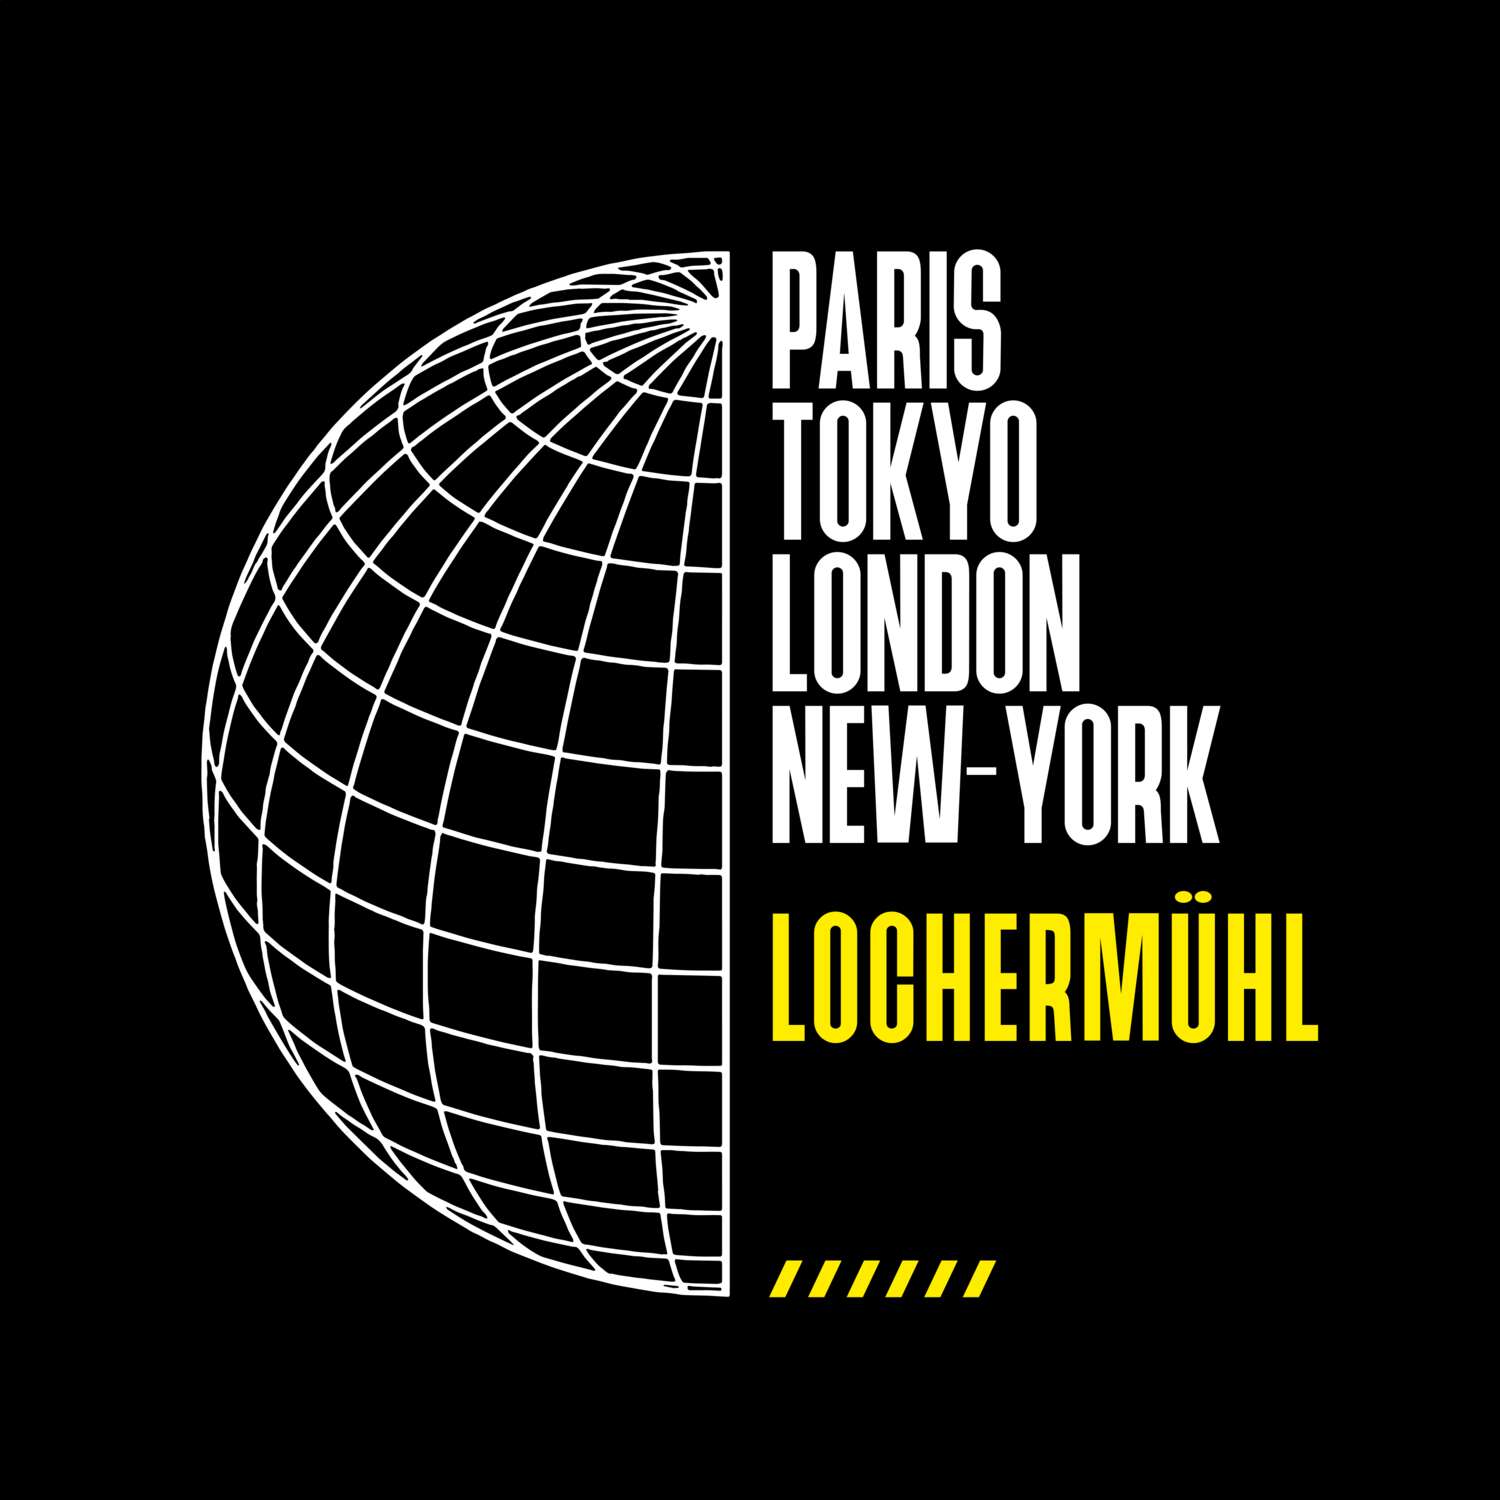 Lochermühl T-Shirt »Paris Tokyo London«